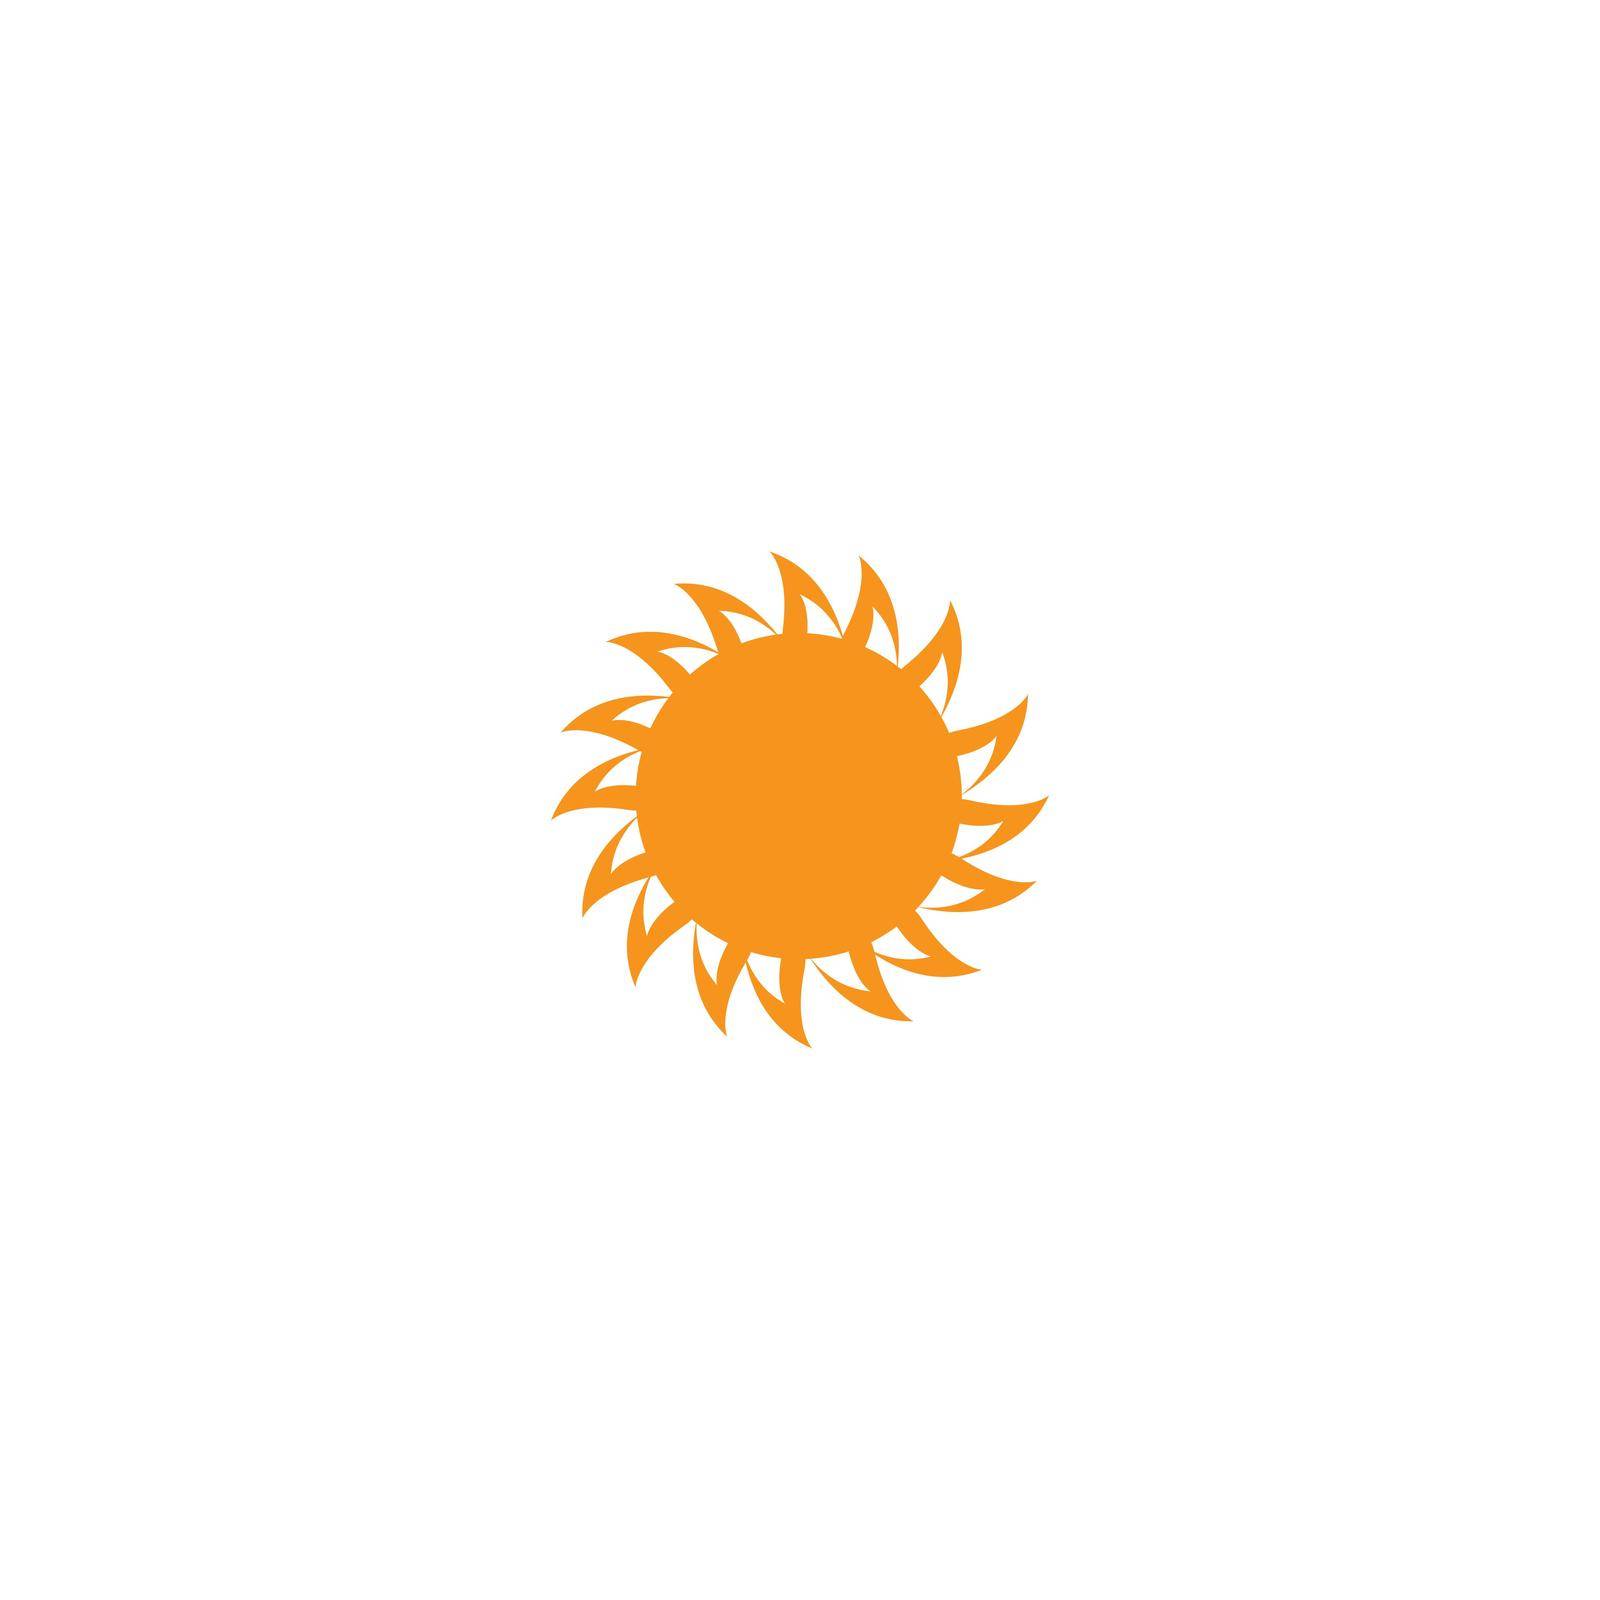 Sun logo and symbols star icon web Vector by Graphicindo